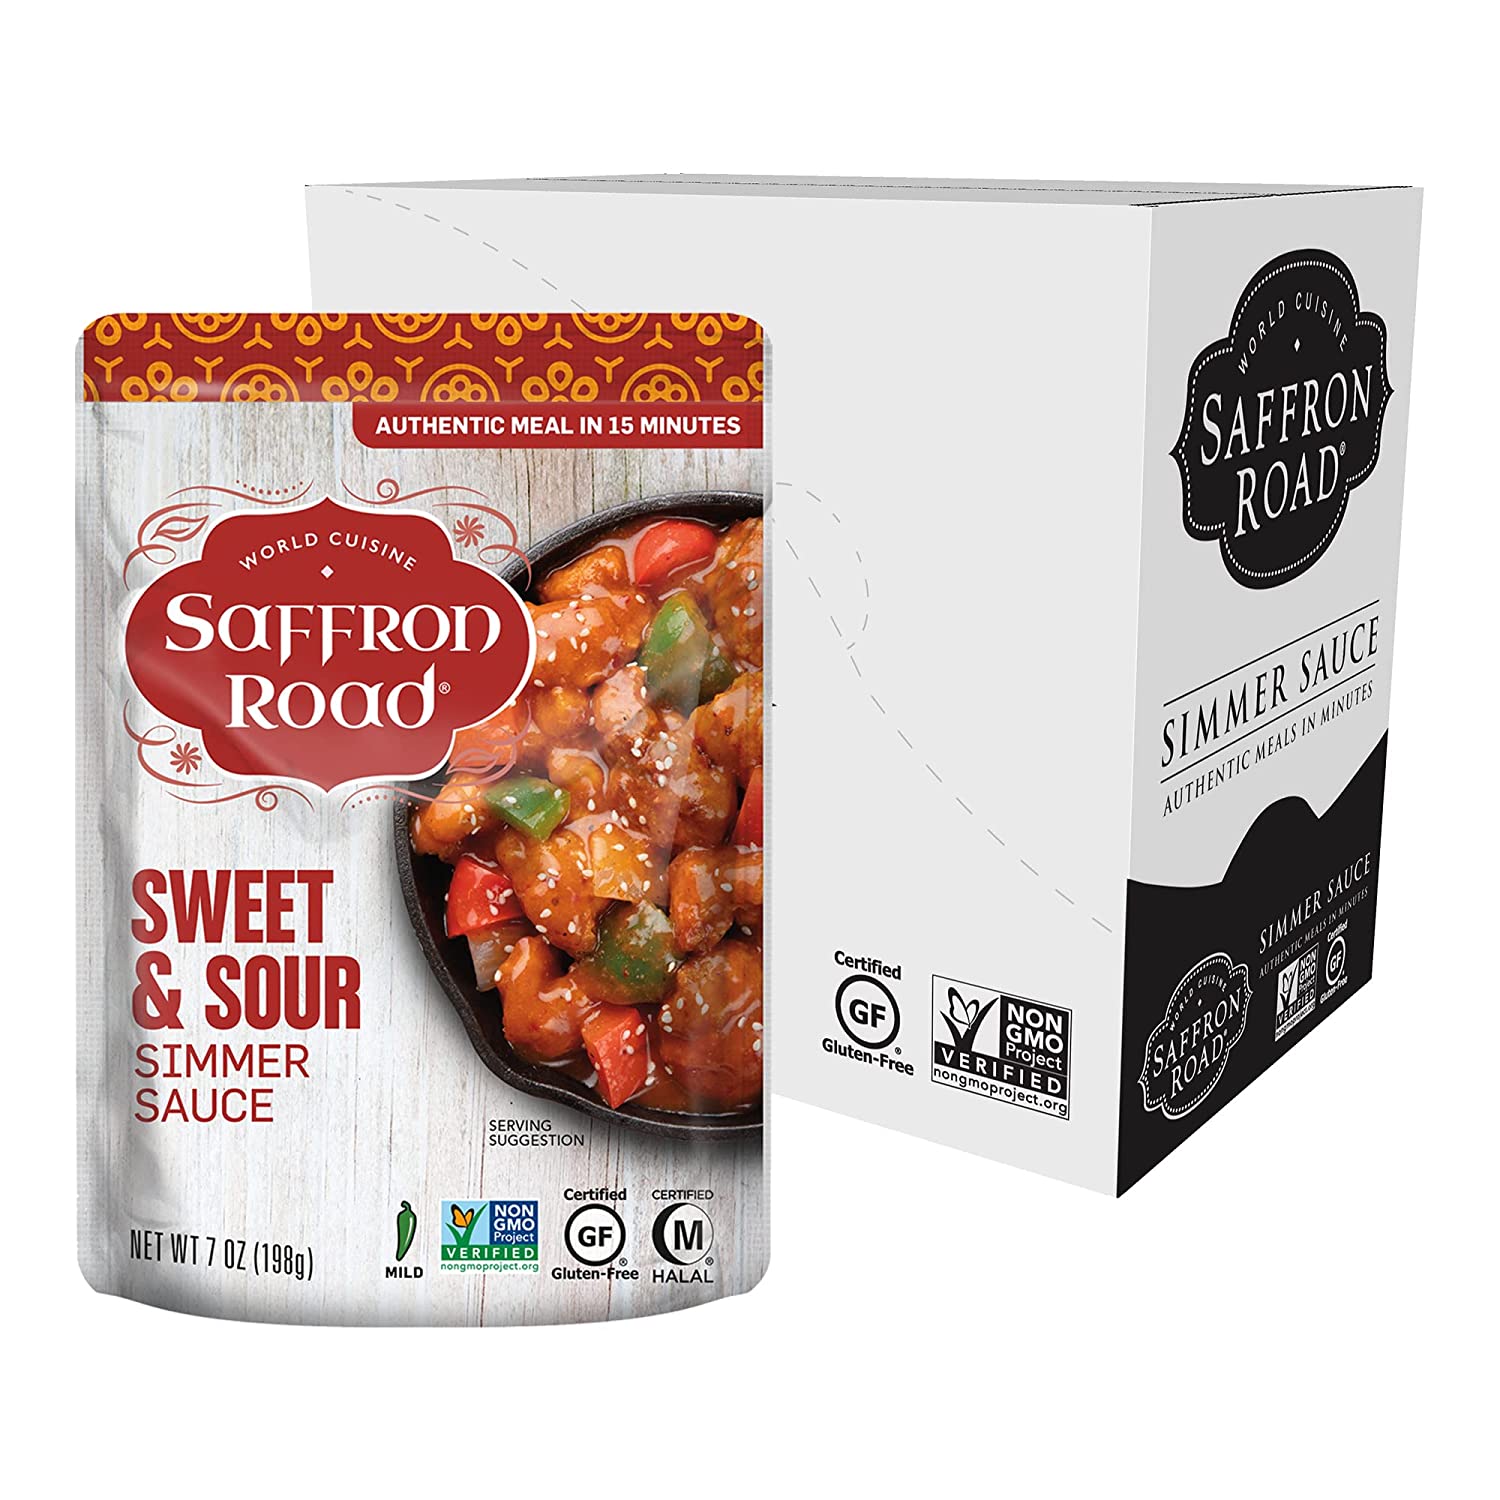 Sweet & Sour Simmer Sauce Simmer Sauce saffron-road-b2c 8 Pack (7oz) 